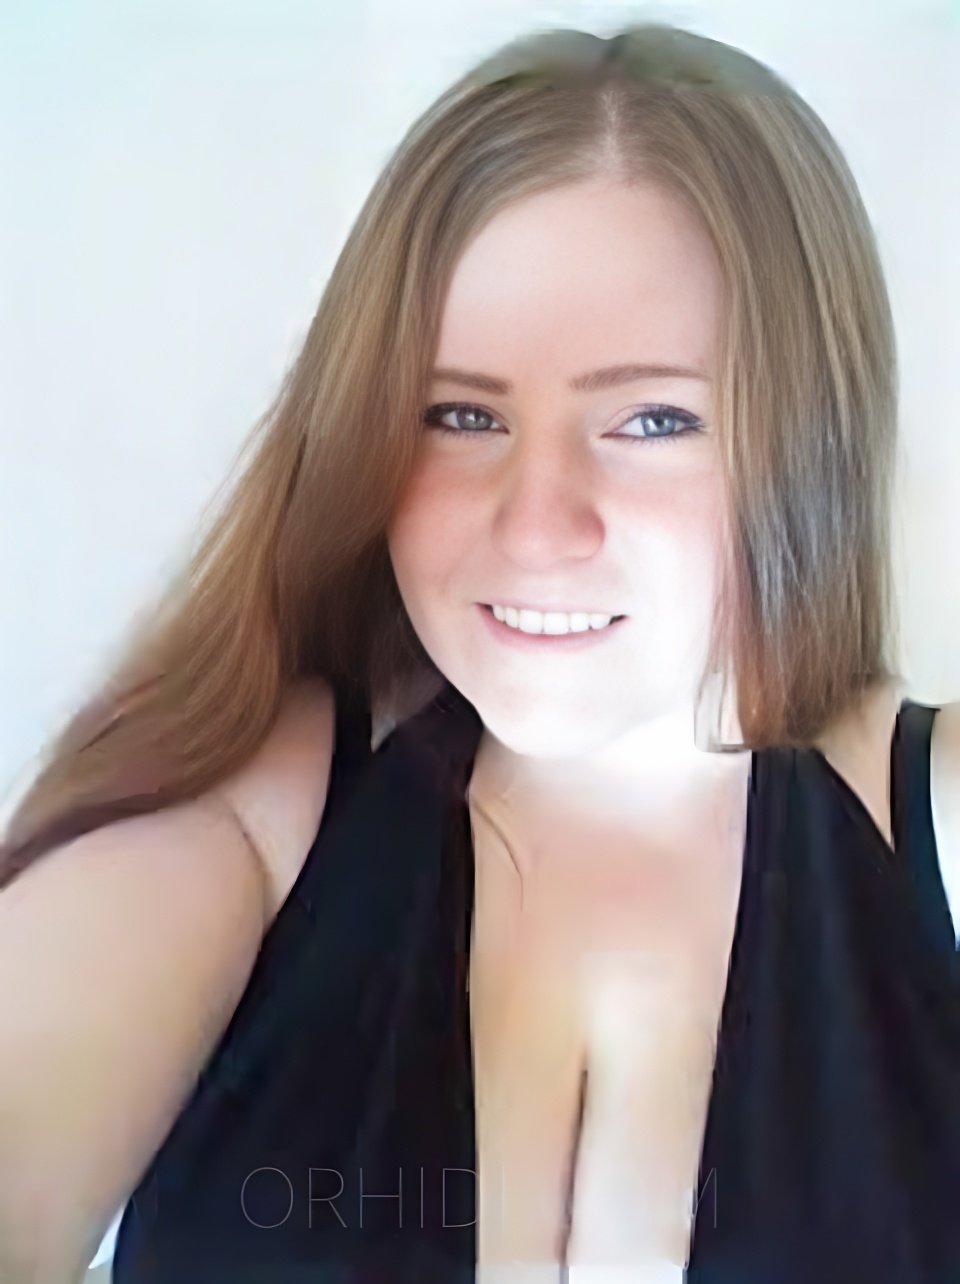 Meet Amazing Sanfte Melly (30) - Erholsame Lust: Top Escort Girl - profile photo 1